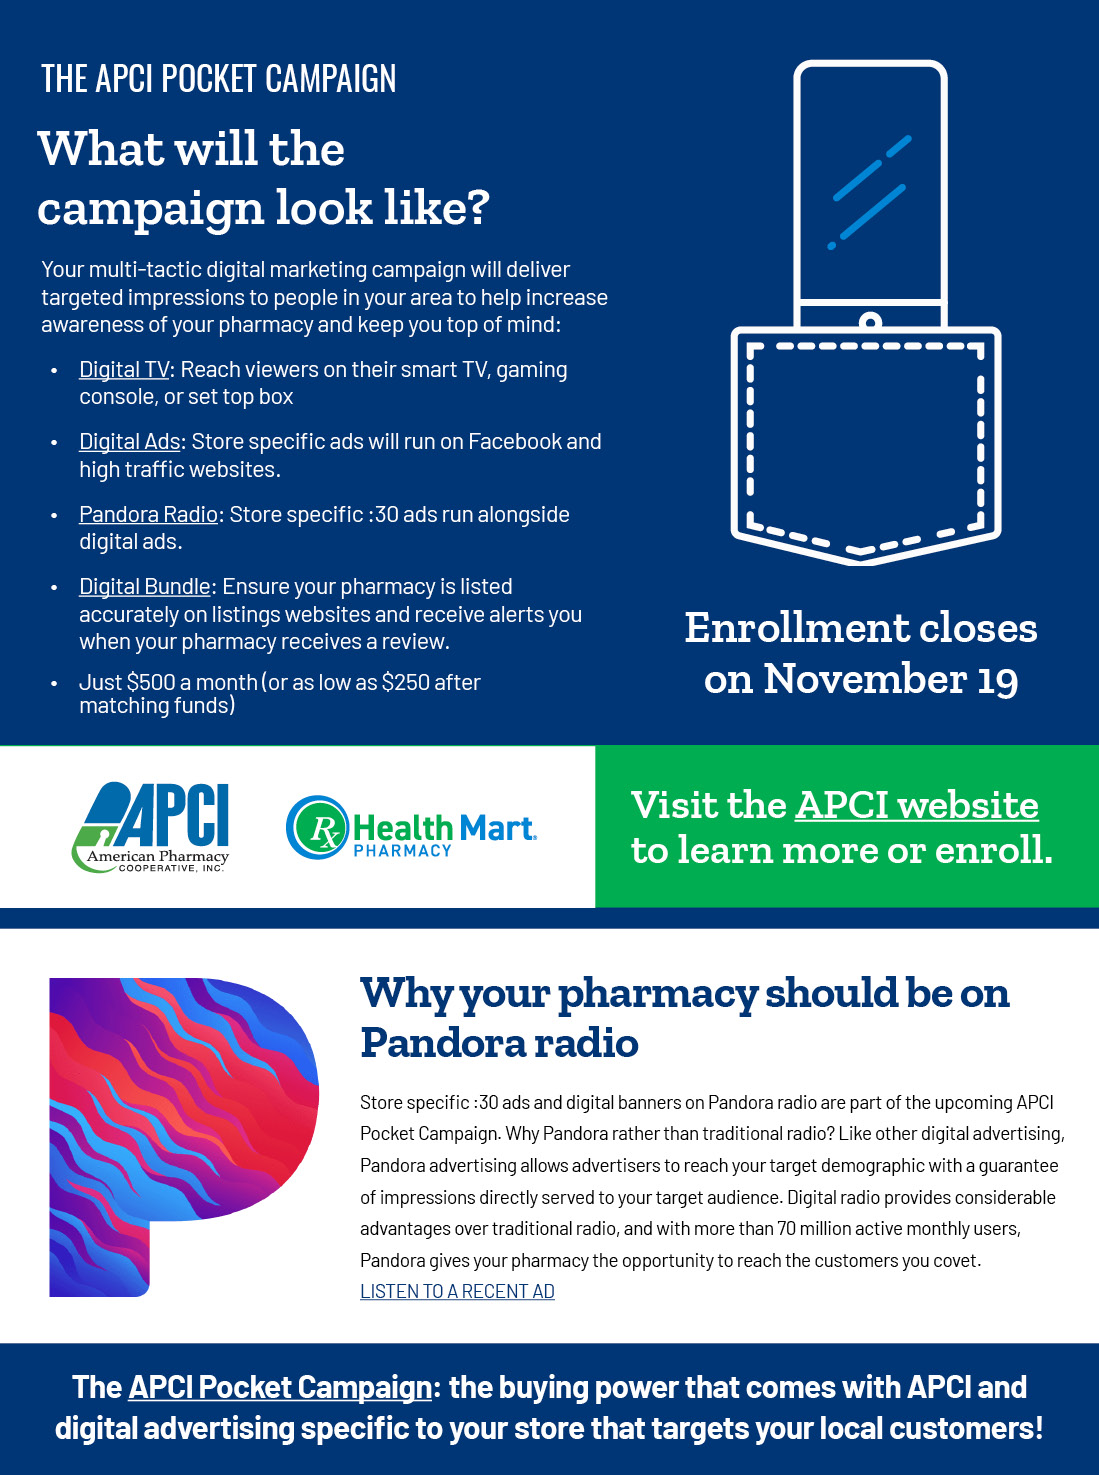 APCI Pocket Campaign digital advertising ad